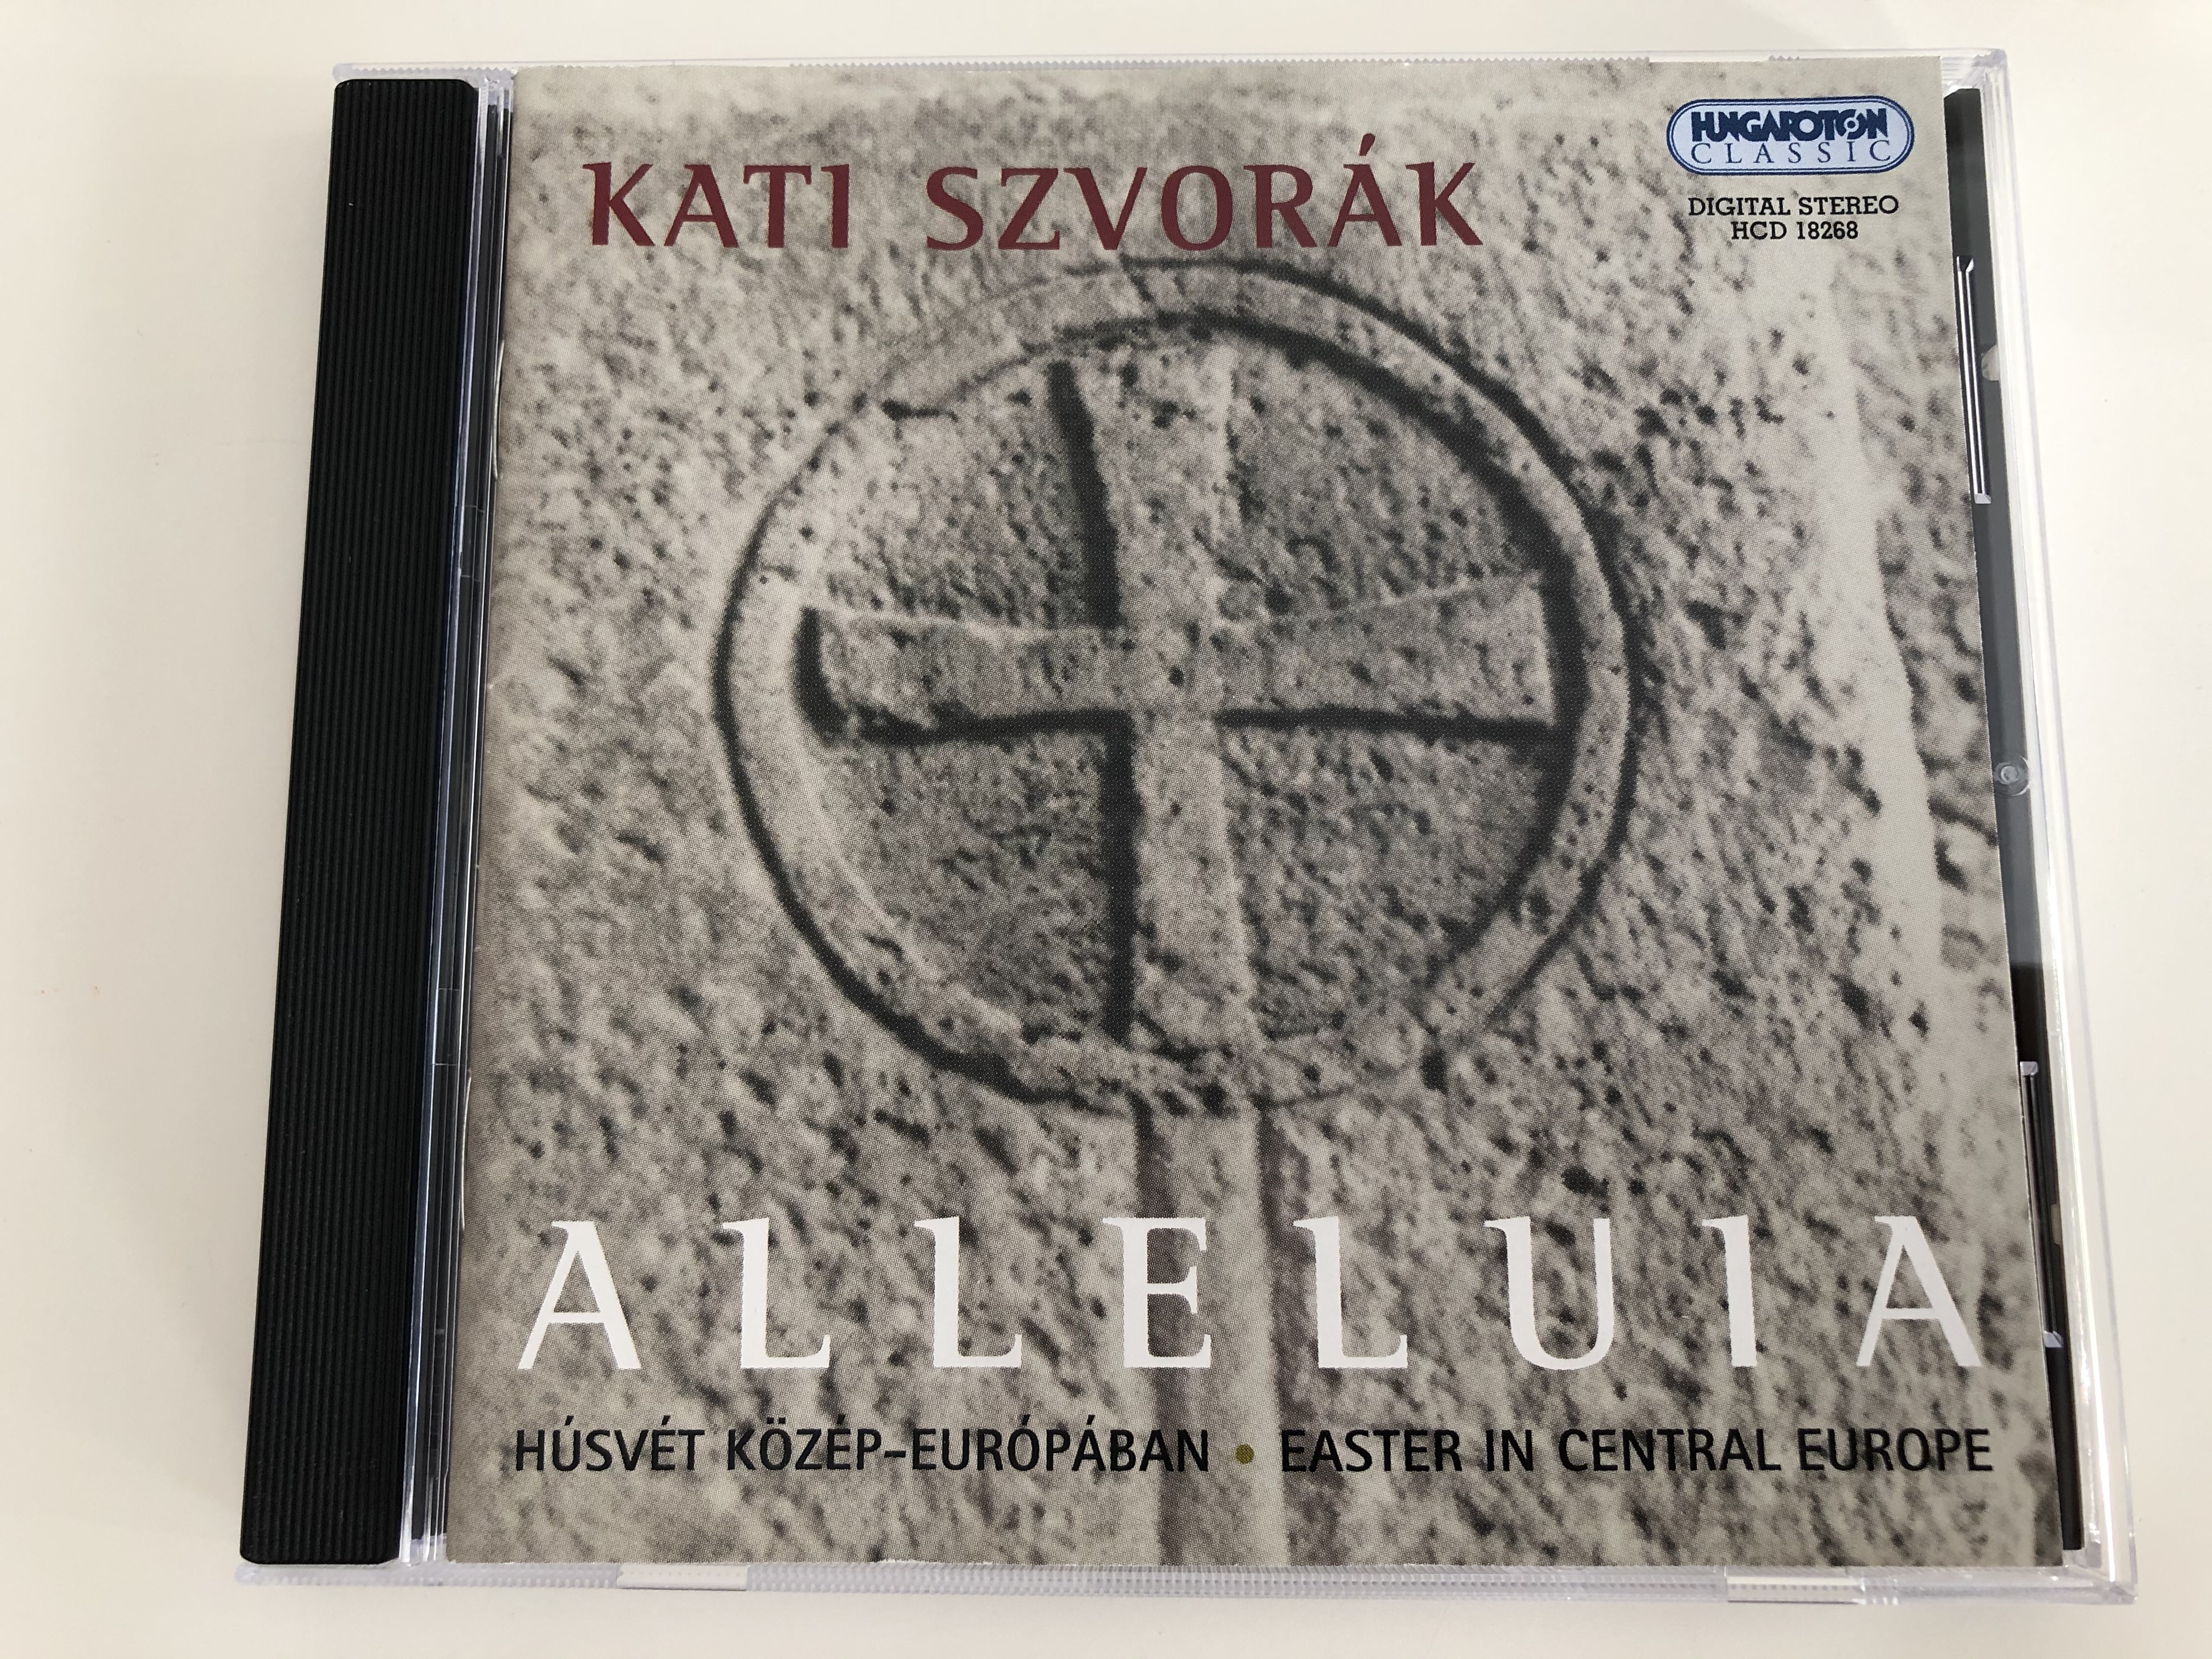 kati-szvor-k-alleluia-h-sv-t-k-z-p-eur-p-ban-easter-in-central-europe-hungaroton-classic-audio-cd-2004-stereo-hcd-18268-1-.jpg